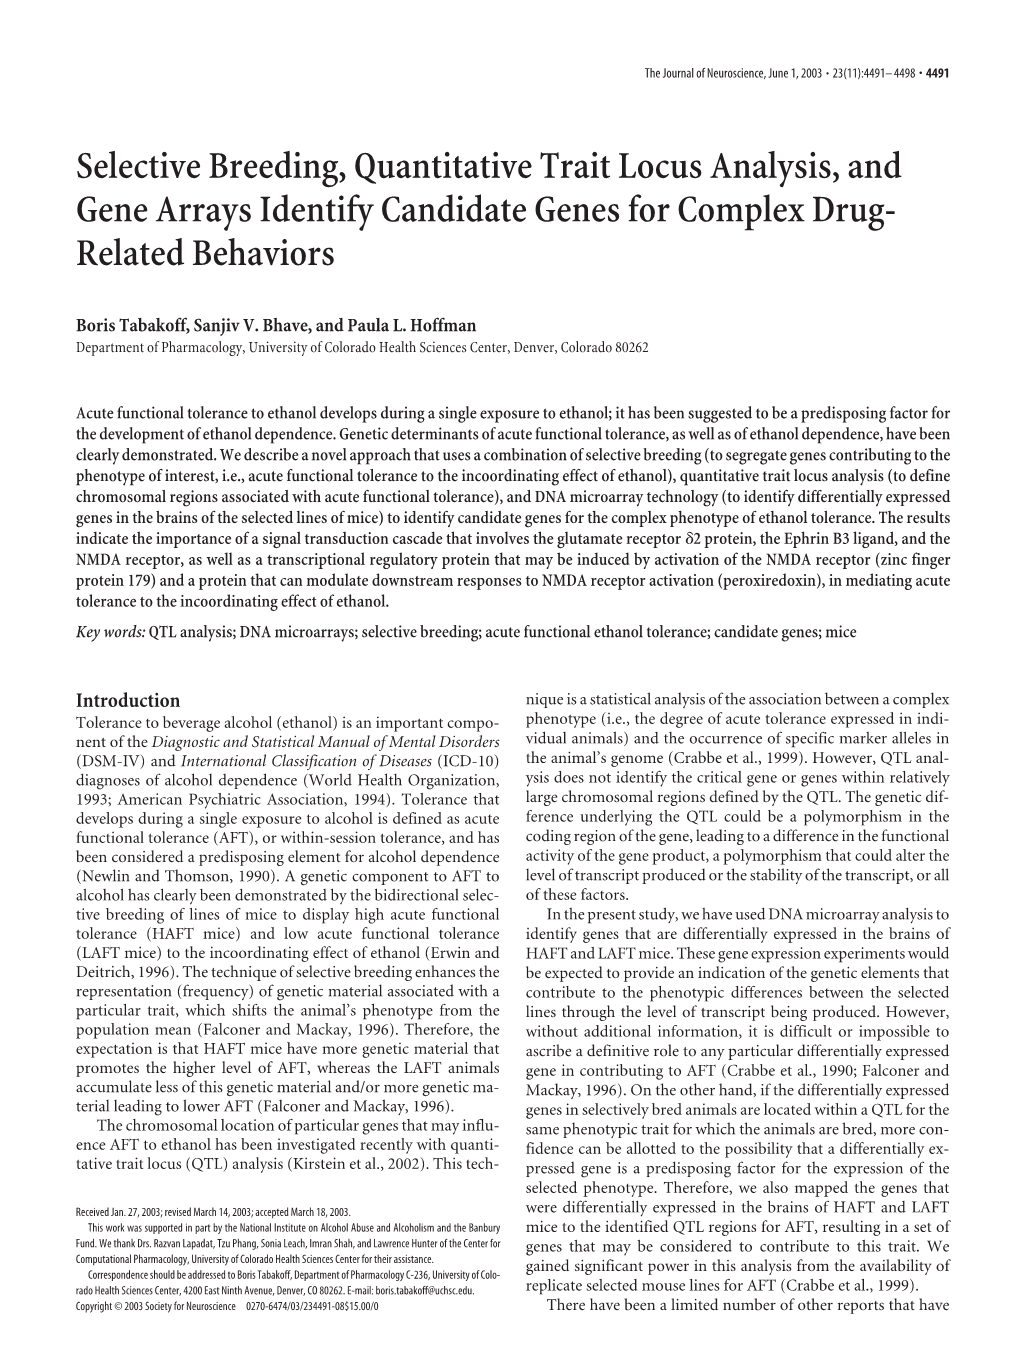 Selective Breeding, Quantitative Trait Locus Analysis, and Gene Arrays Identify Candidate Genes for Complex Drug- Related Behaviors